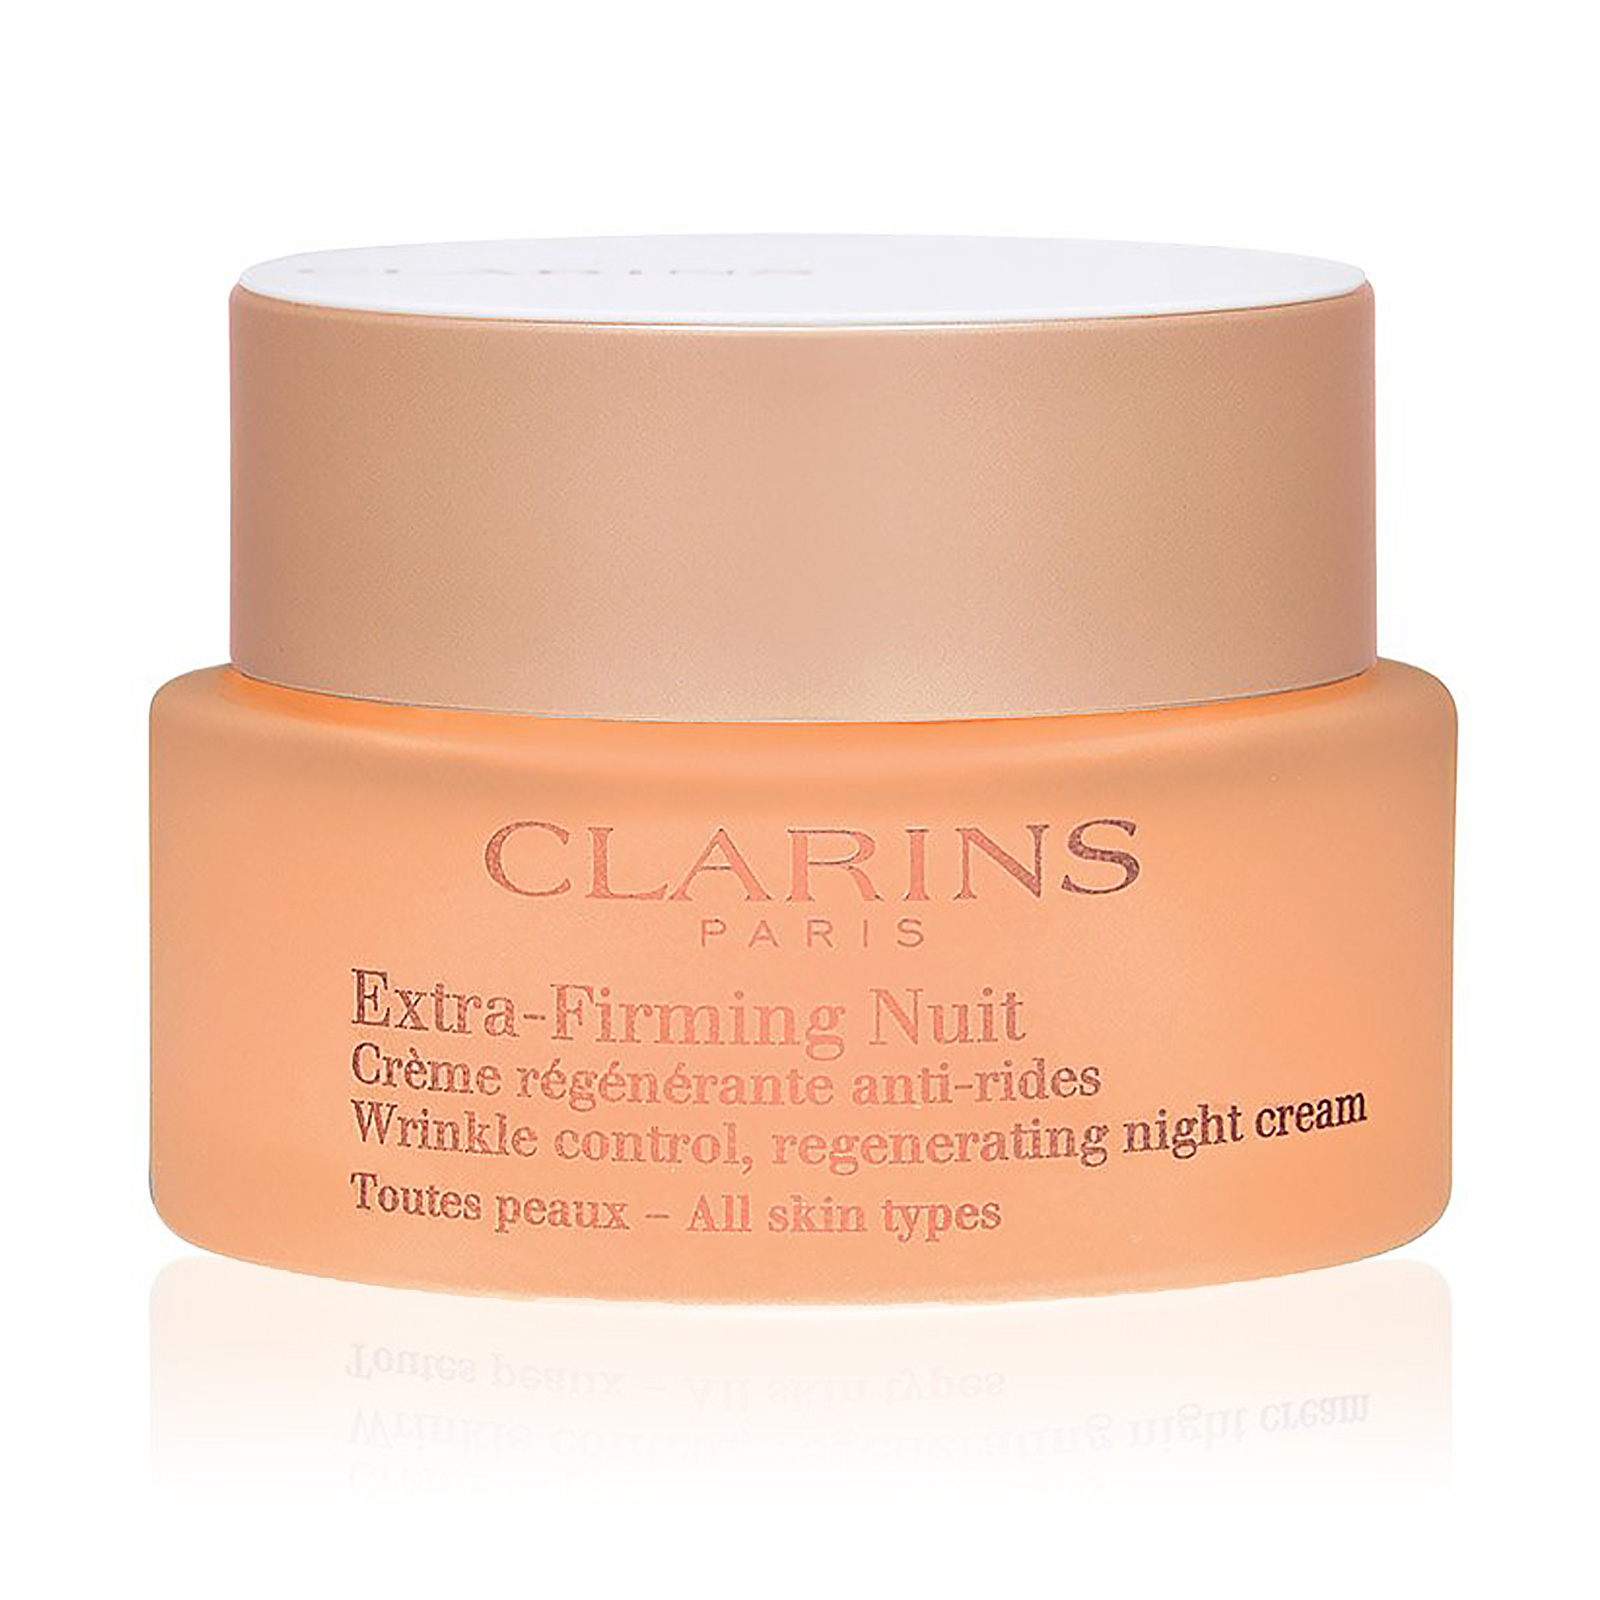 Extra-Firming Wrinkle Control, Regenerating Night Cream